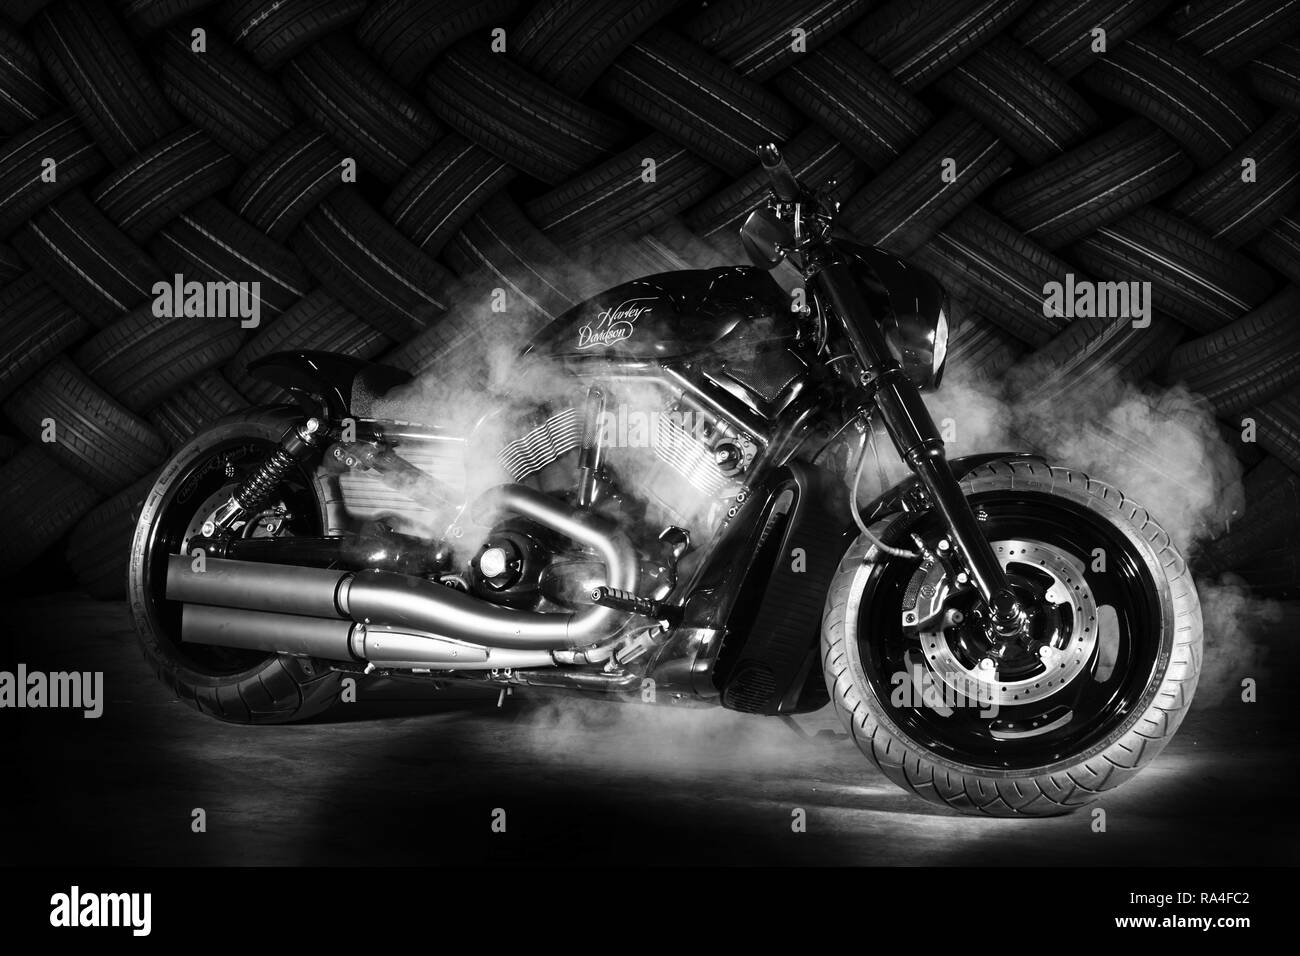 Motorcycle, Harley Davidson, monochrome, Germany Stock Photo - Alamy